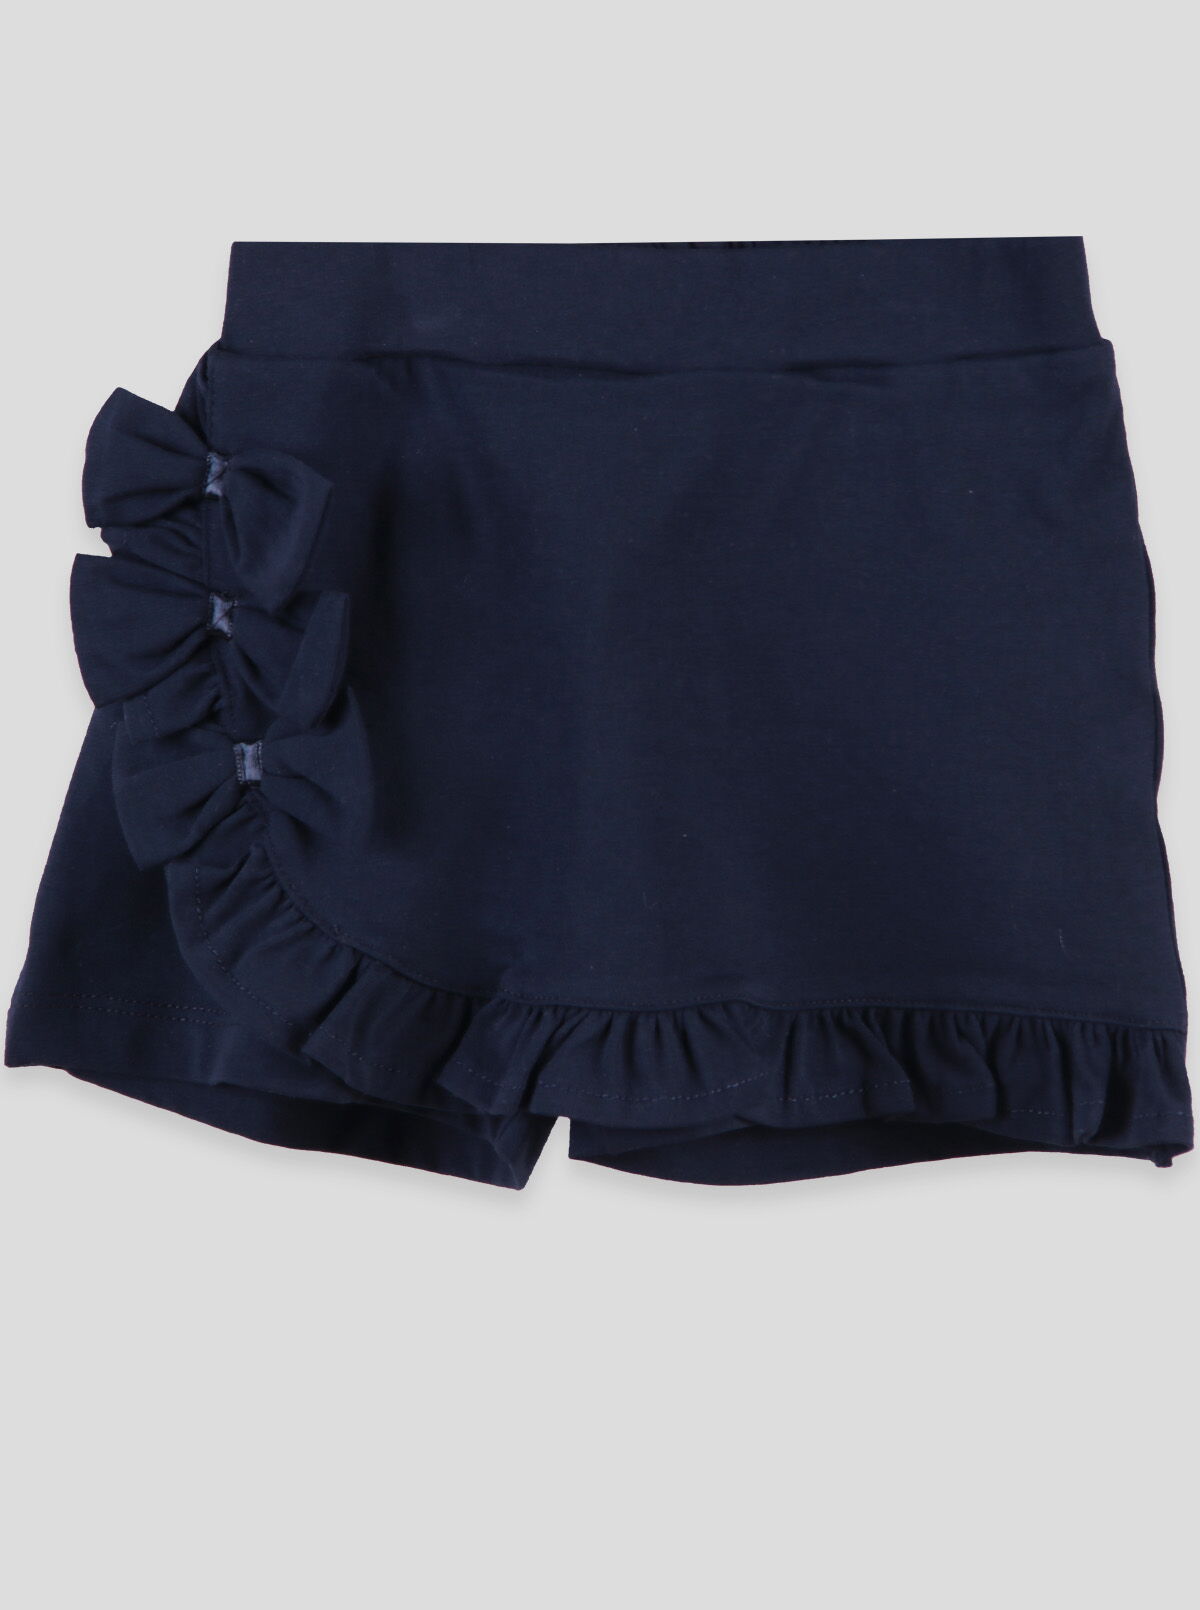 Юбка-шорты для девочки Breeze синяя 12416 - цена